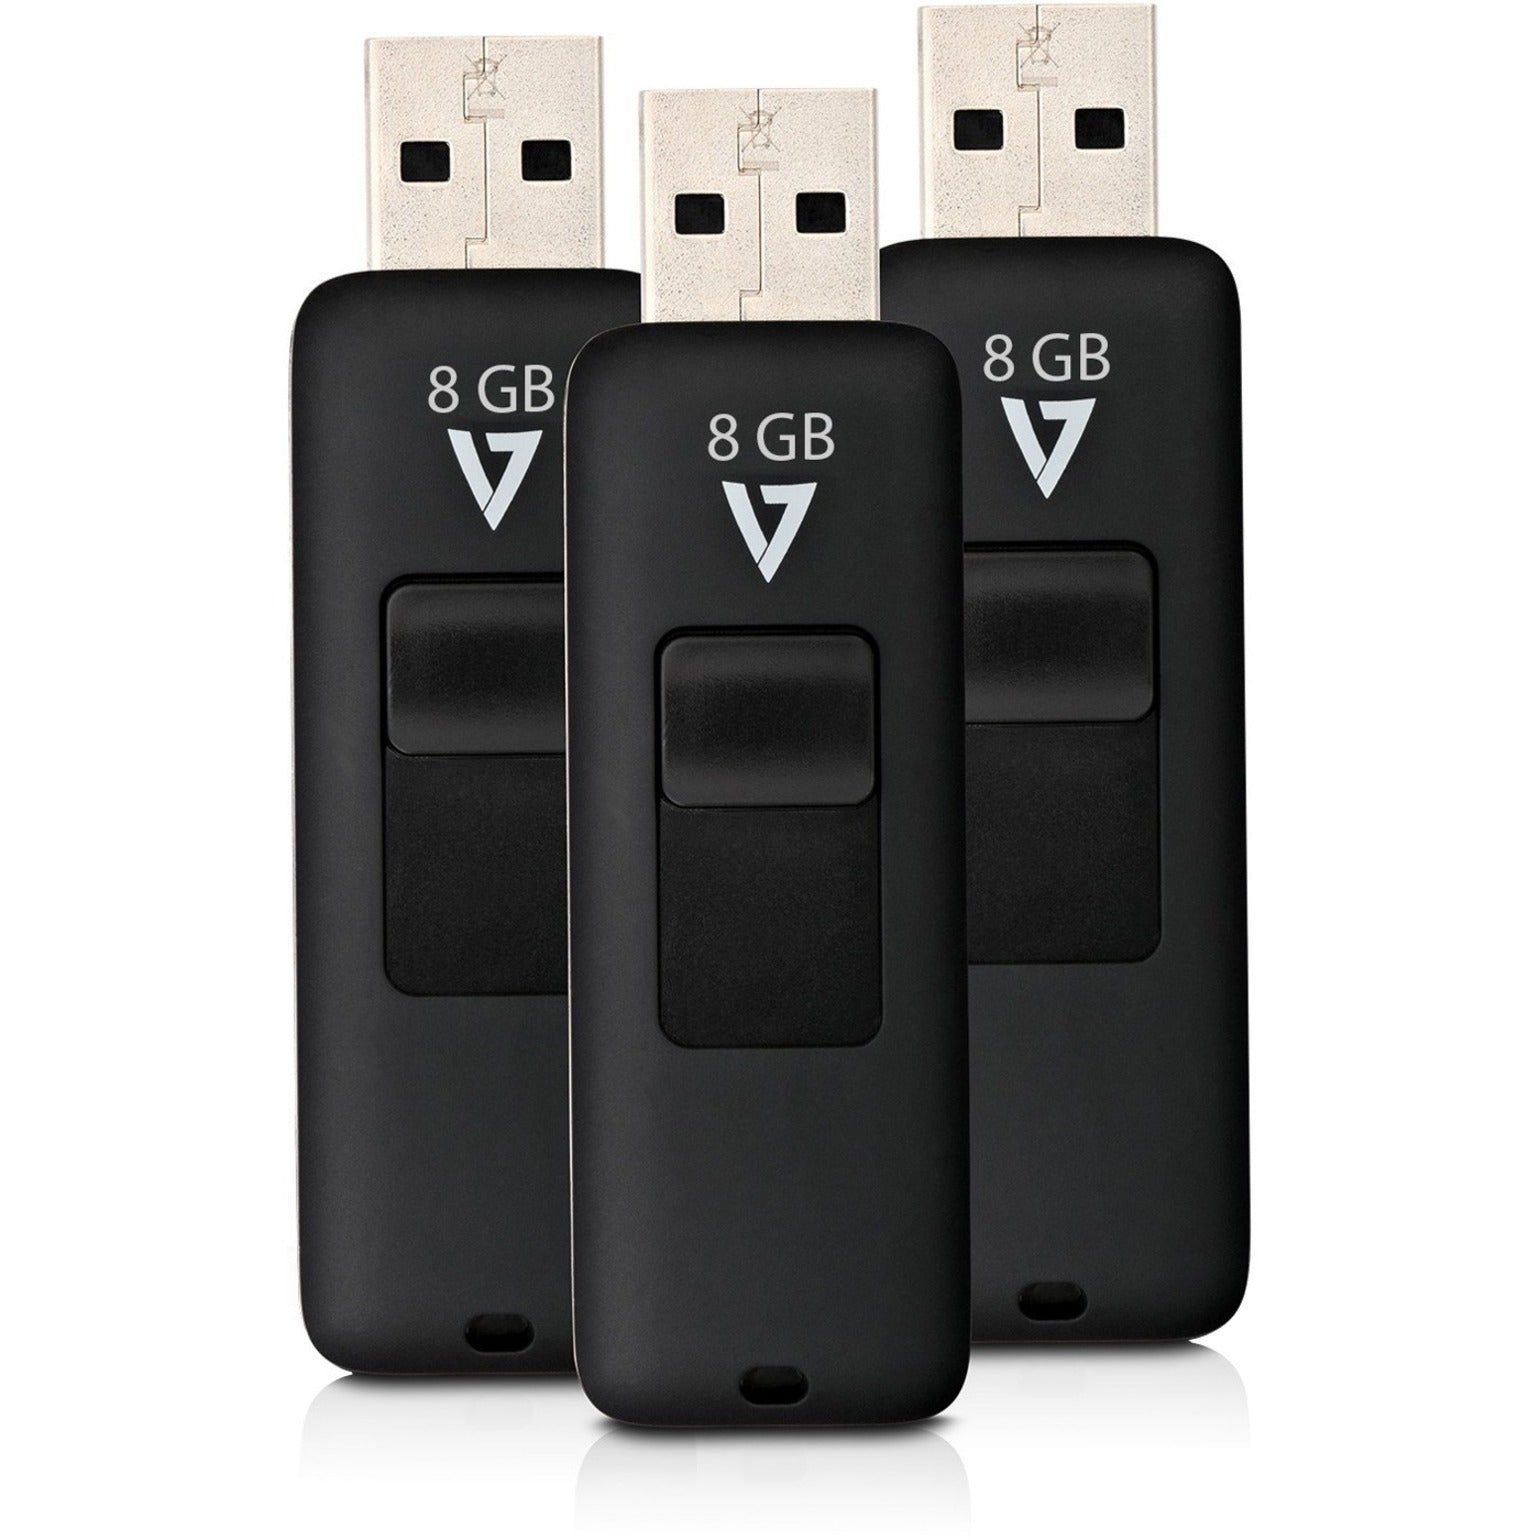 V7 VF28GAR-3PK-3N 8GB Flash Drive 3 Pack Combo, Retractable, USB 2.0, 5 Year Warranty